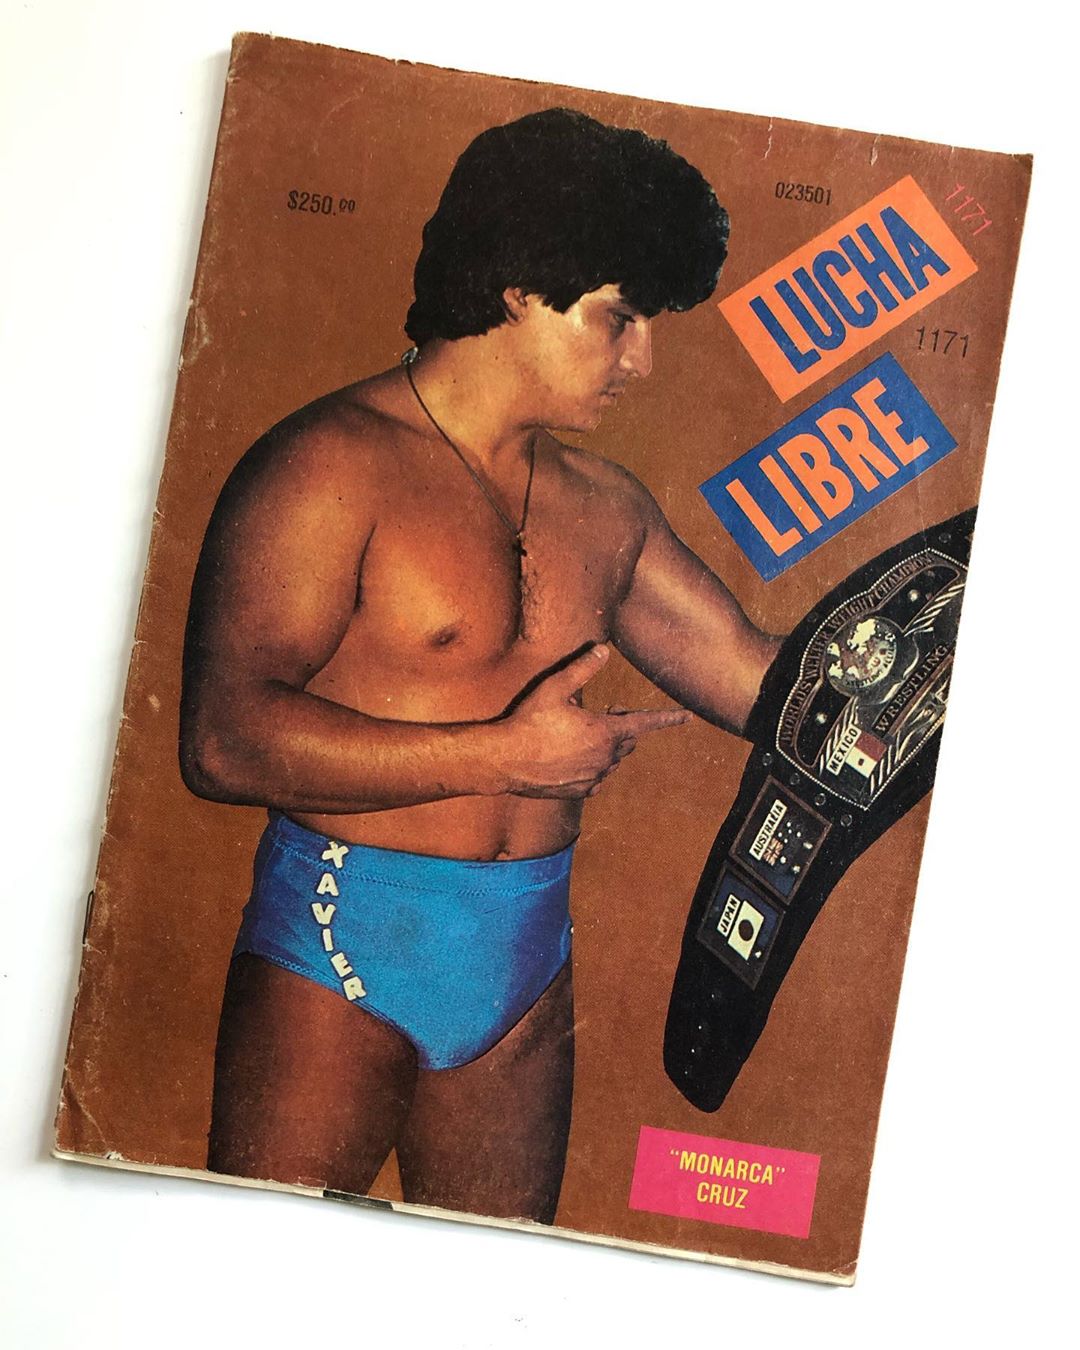 Lucha Libre Volume 1171